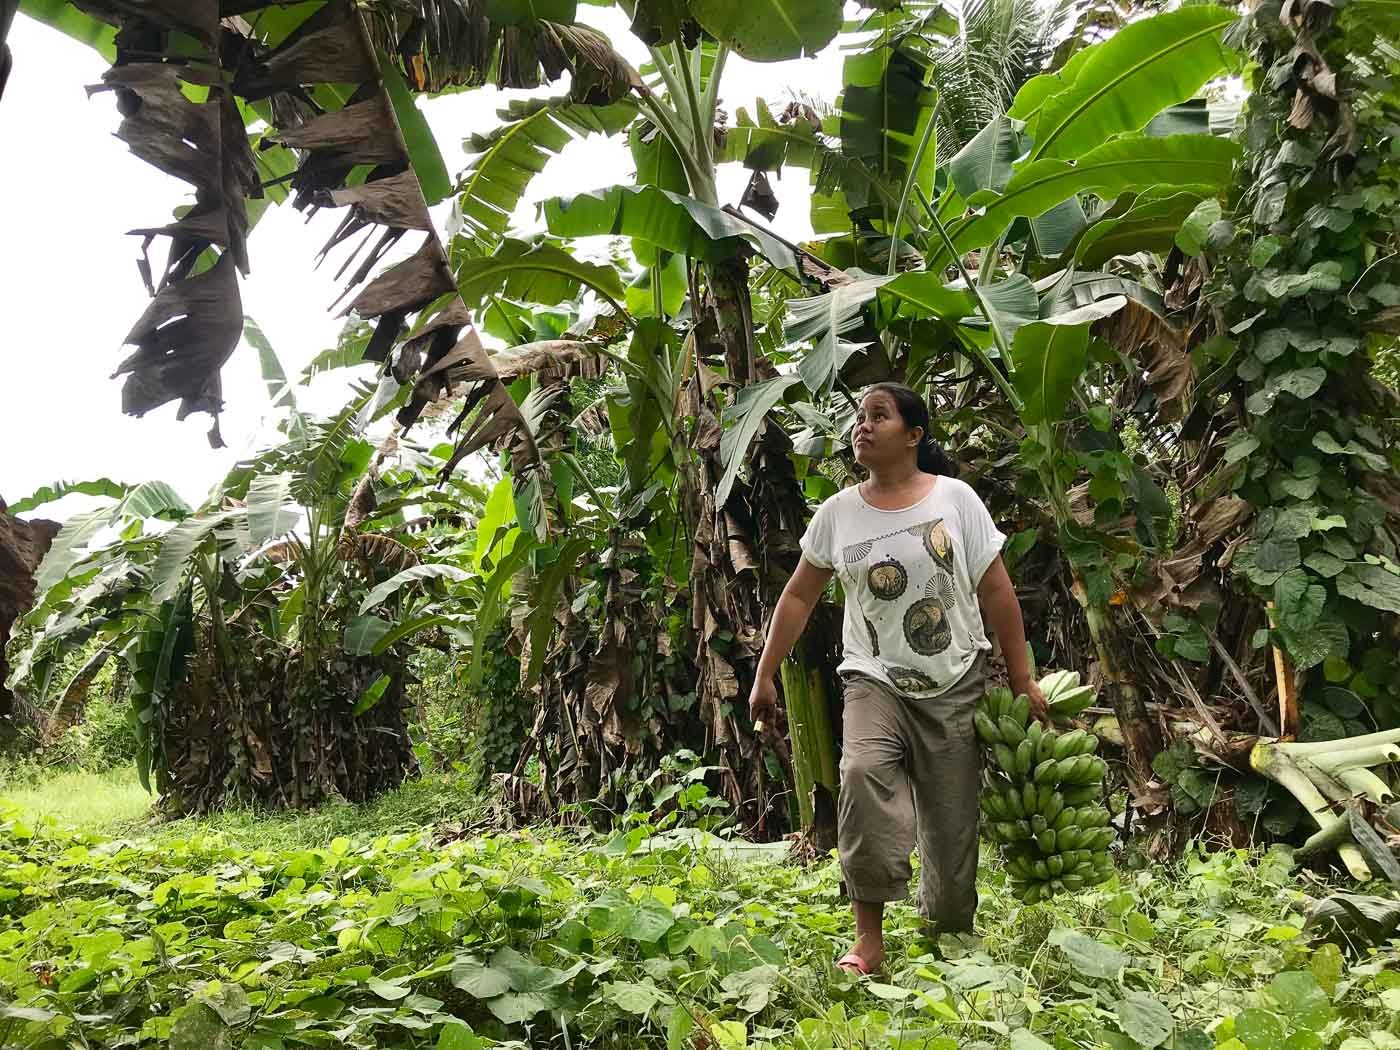 Climate change makes banana, seaweed farming hard for women in Palawan